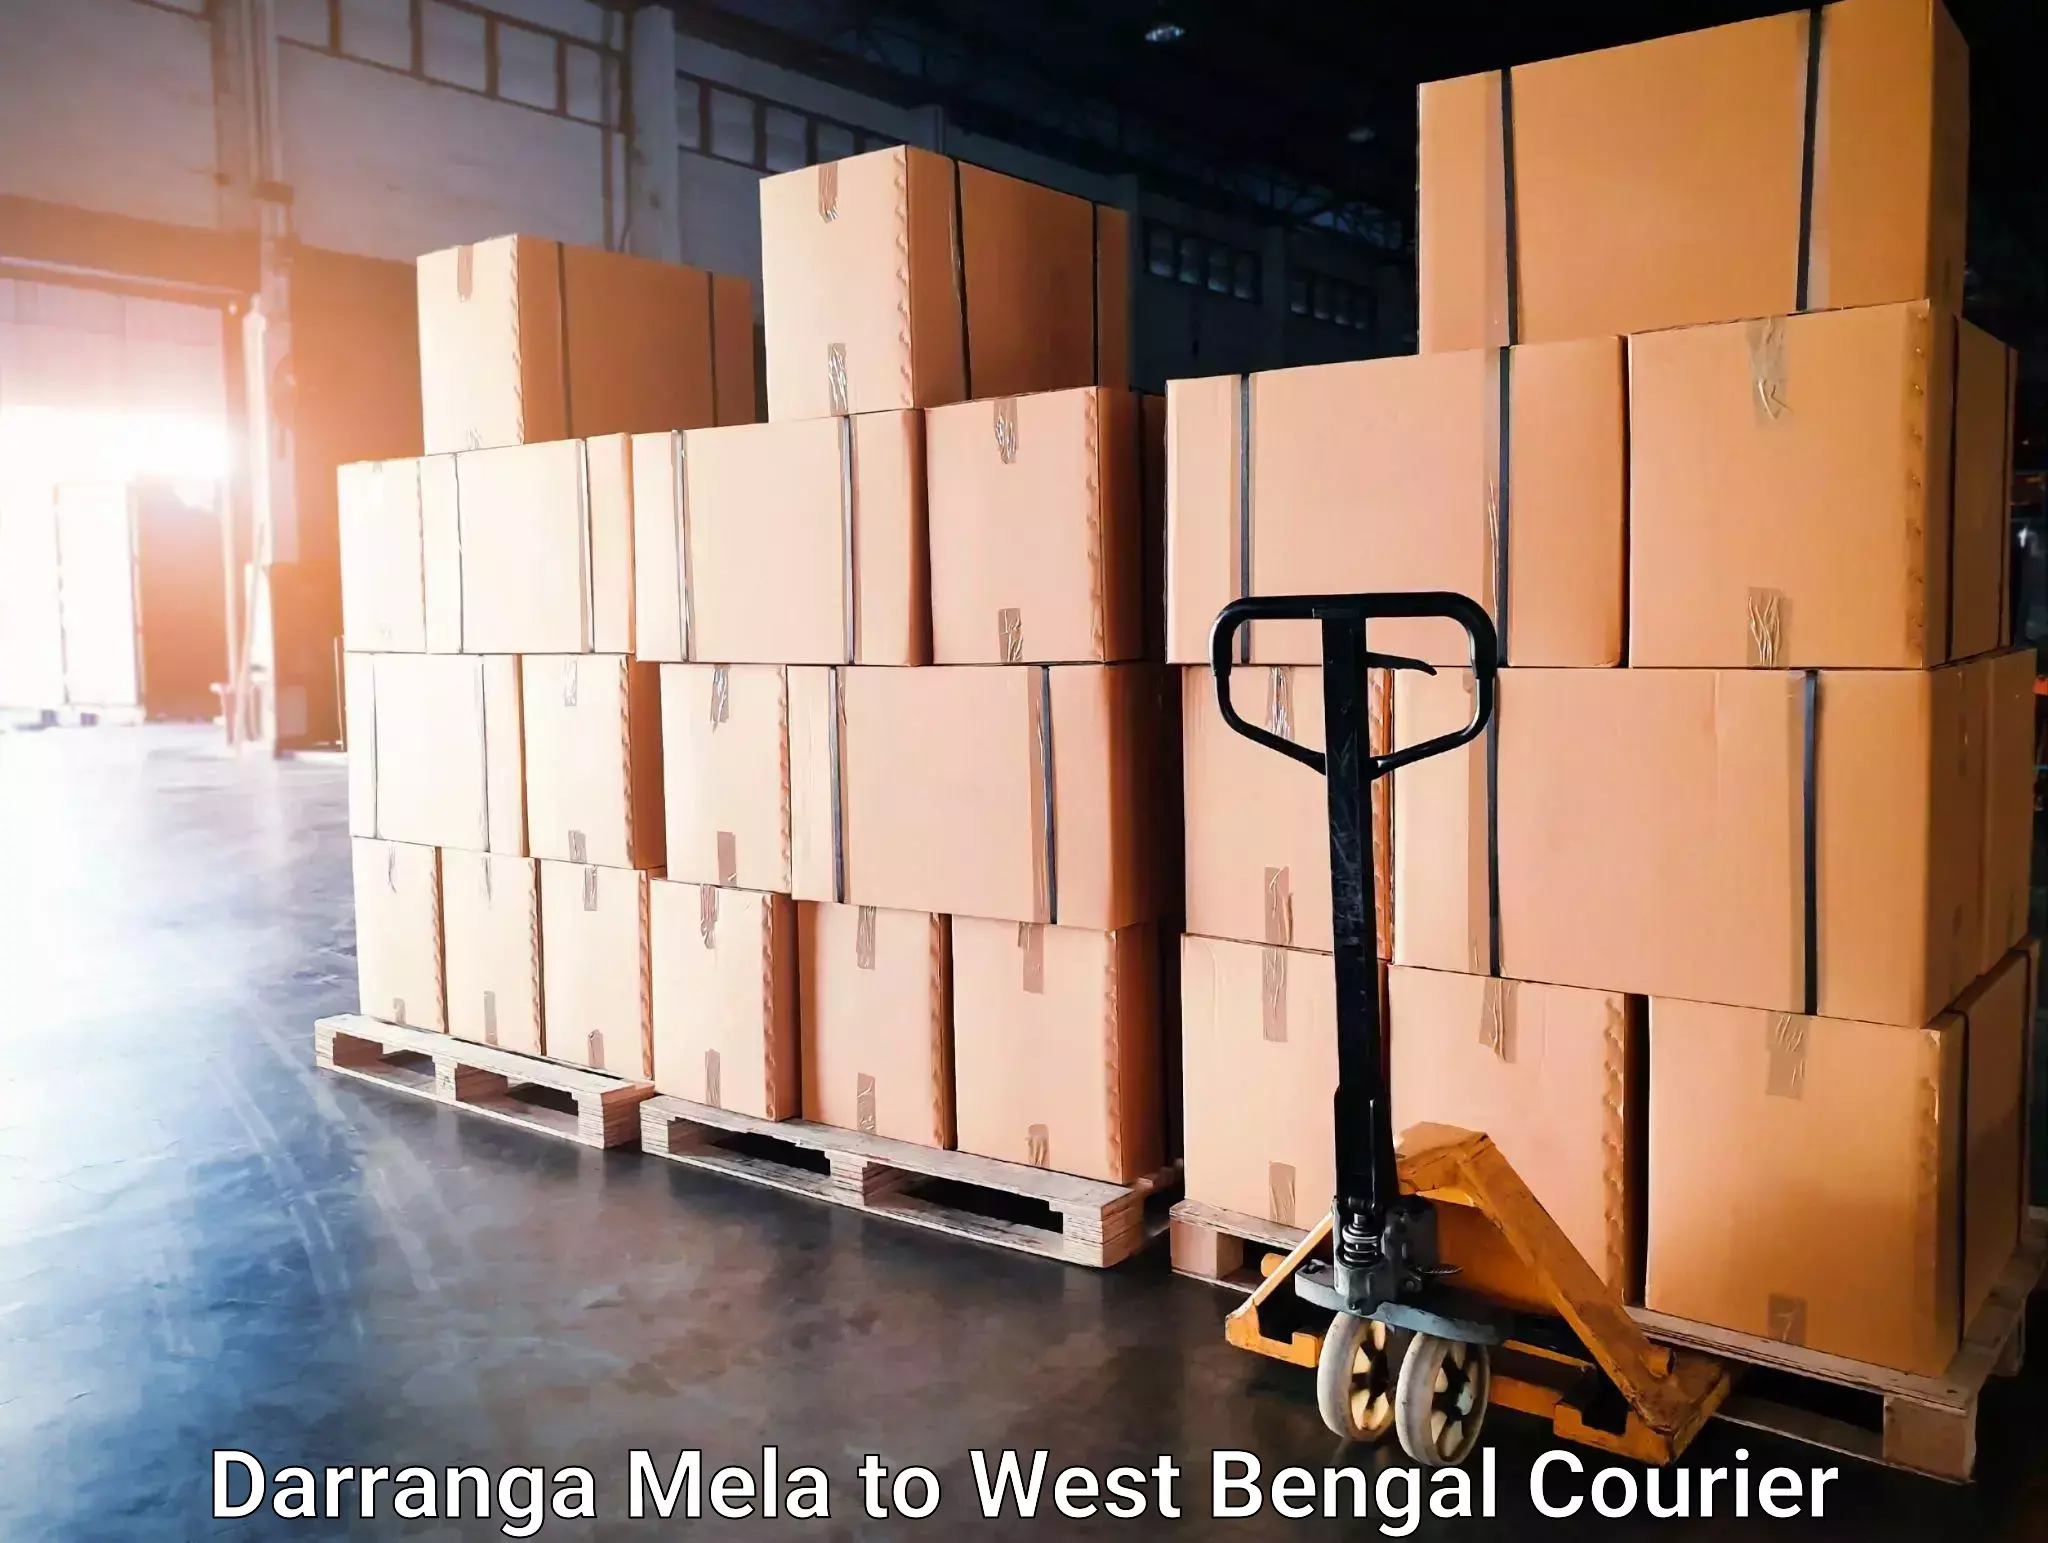 Express delivery solutions Darranga Mela to Bhadreswar